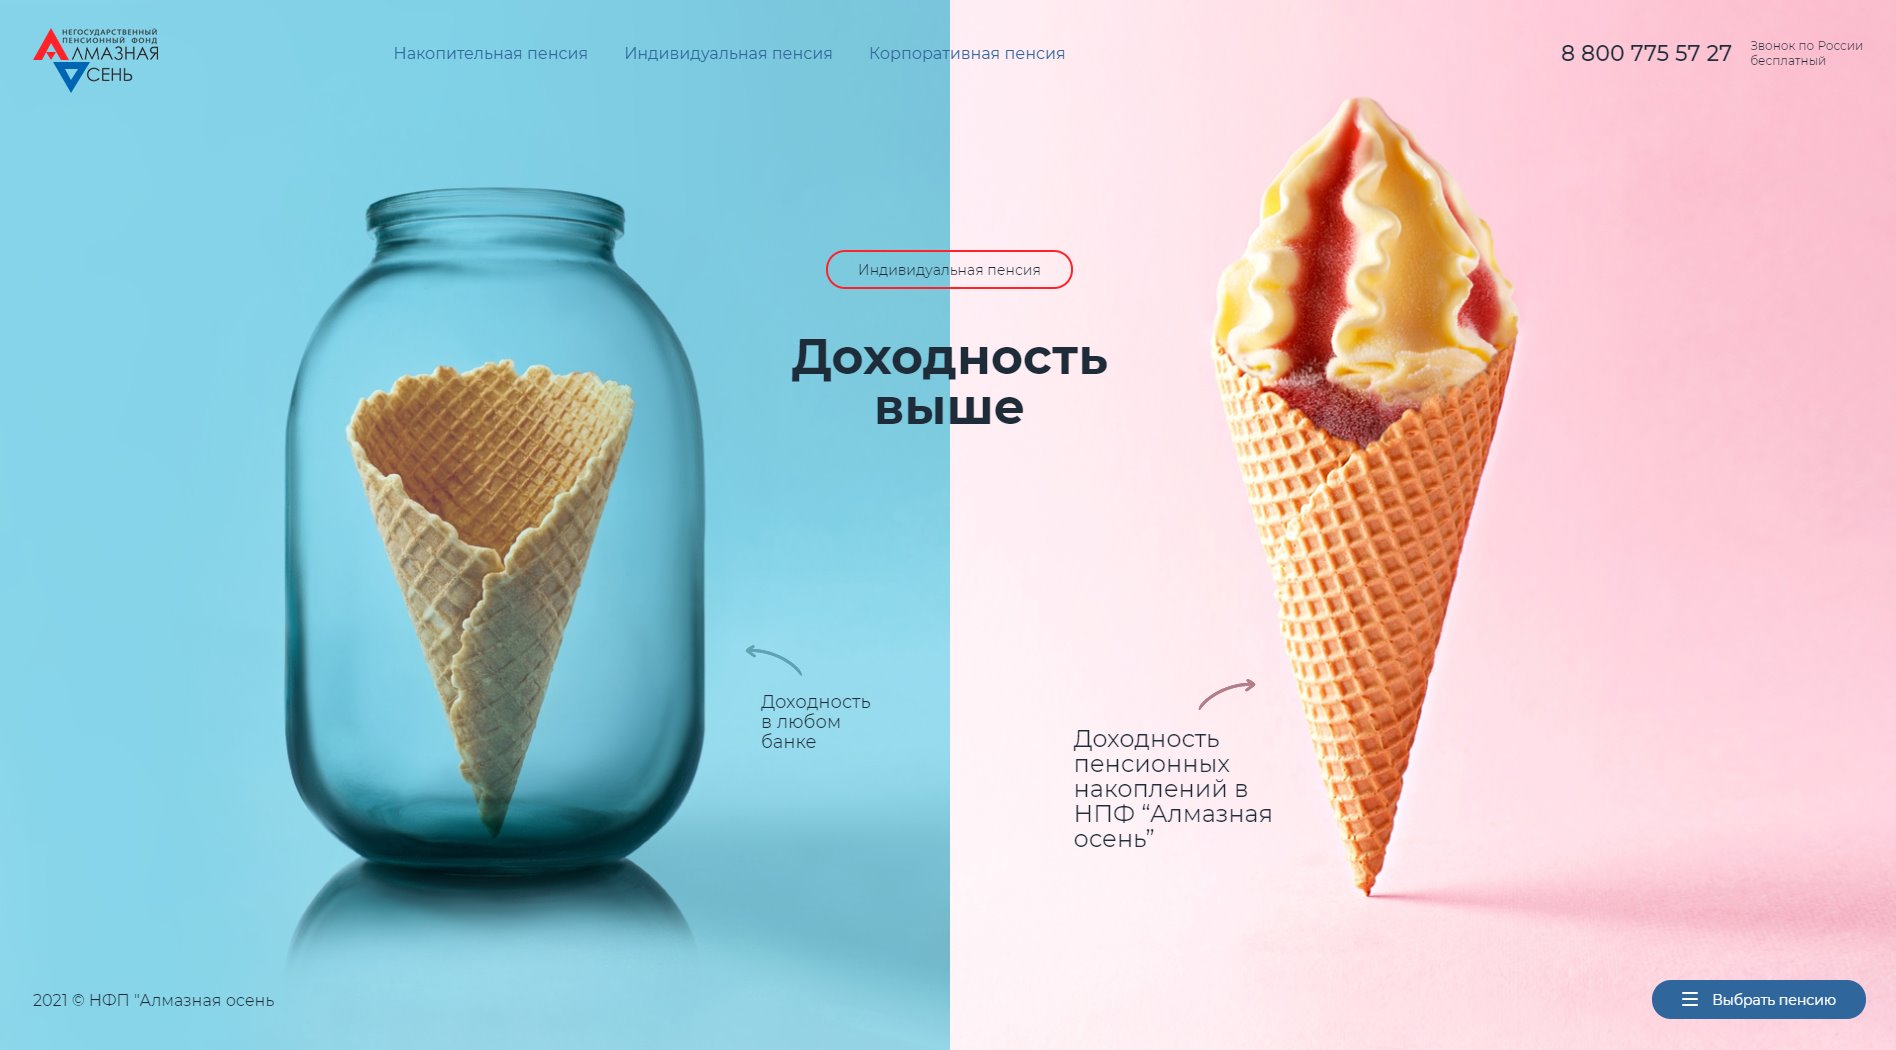 Веб-дизайн, Инфоспутник, Кейсы | | Интернет-реклама от агентства «ОПТИМИЗМ»